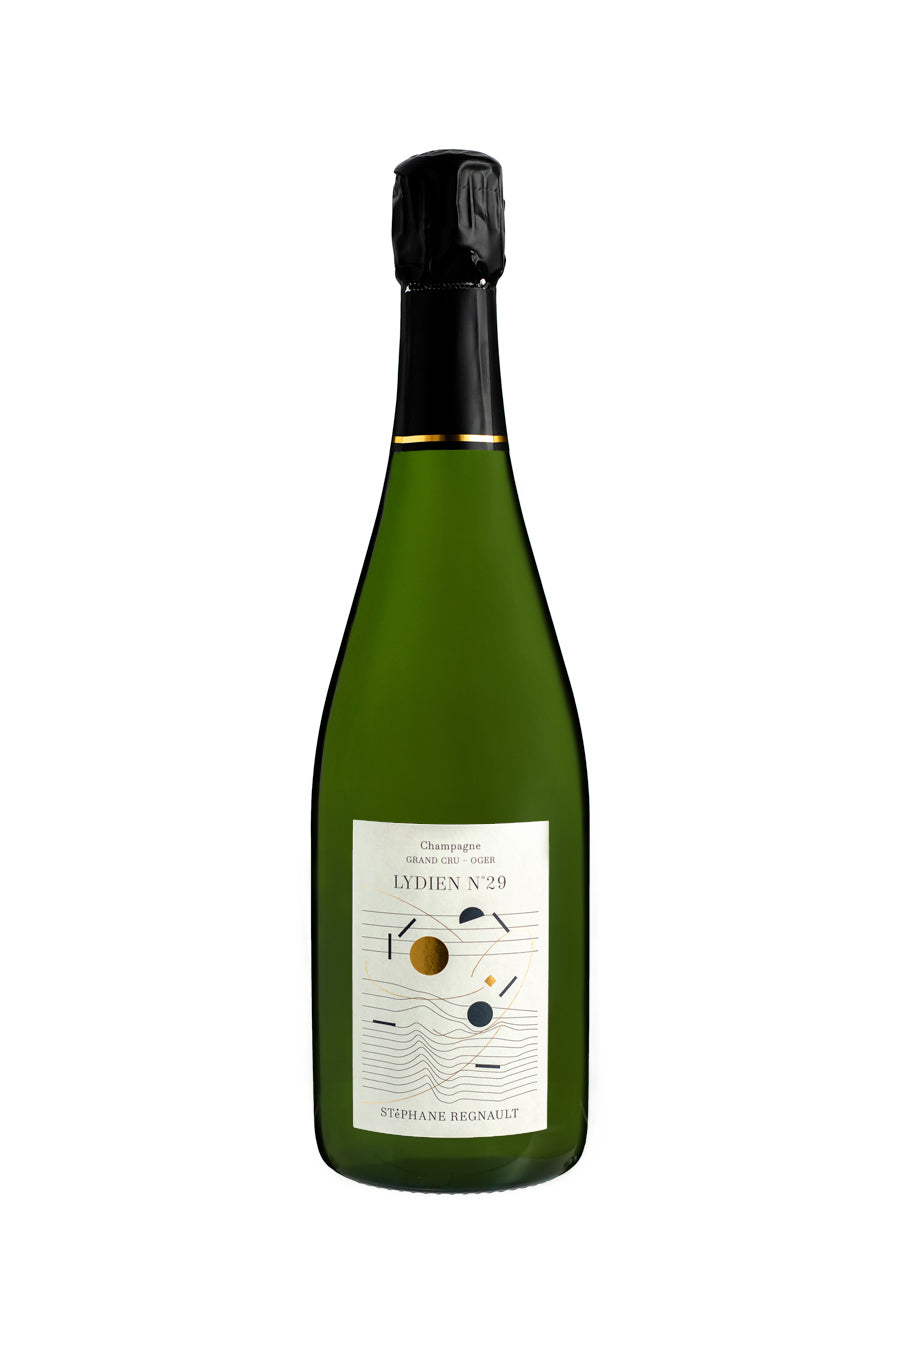 Champagne Stéphane Regnault, Grand Cru 'Lydien' No 45